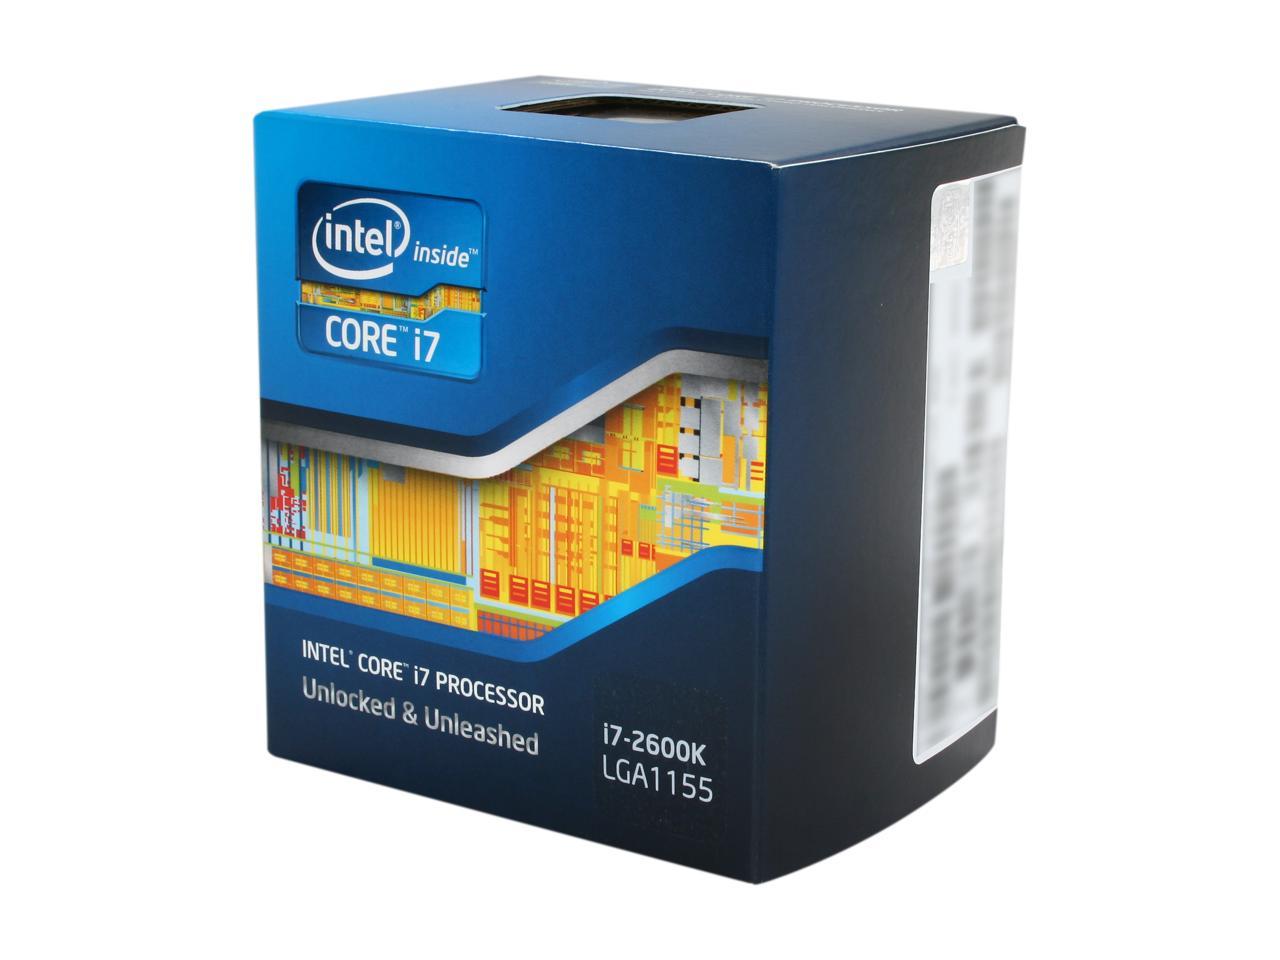 Schiereiland Het Circulaire Intel Core i7-2600K 3.4GHz (Boost) LGA 1155 Desktop Processor - Newegg.com